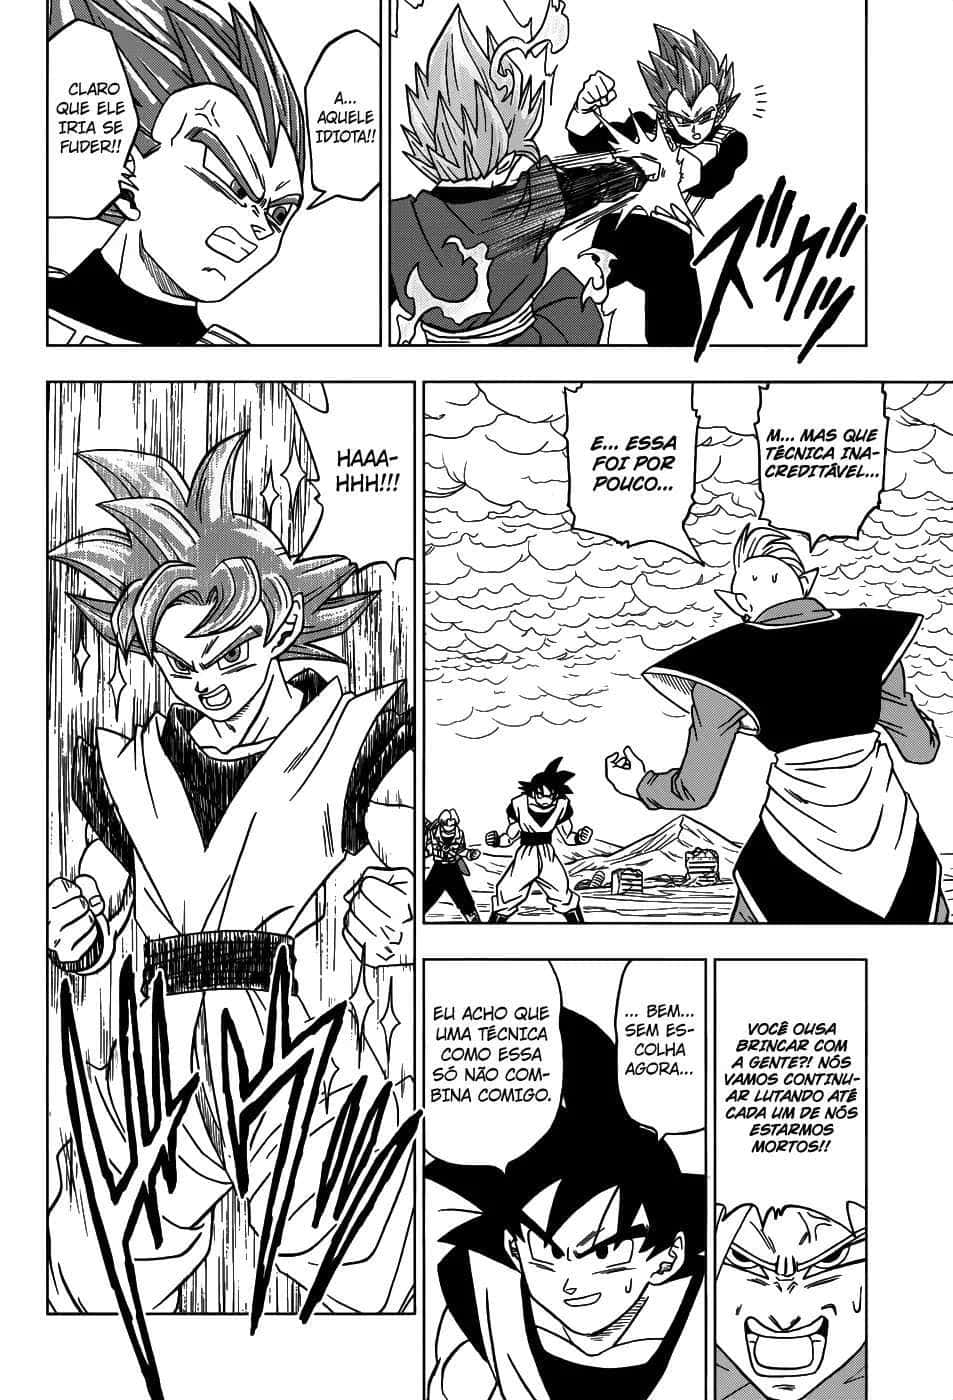 Goku unleashes incredible power in Dragon Ball Super Manga Wallpaper